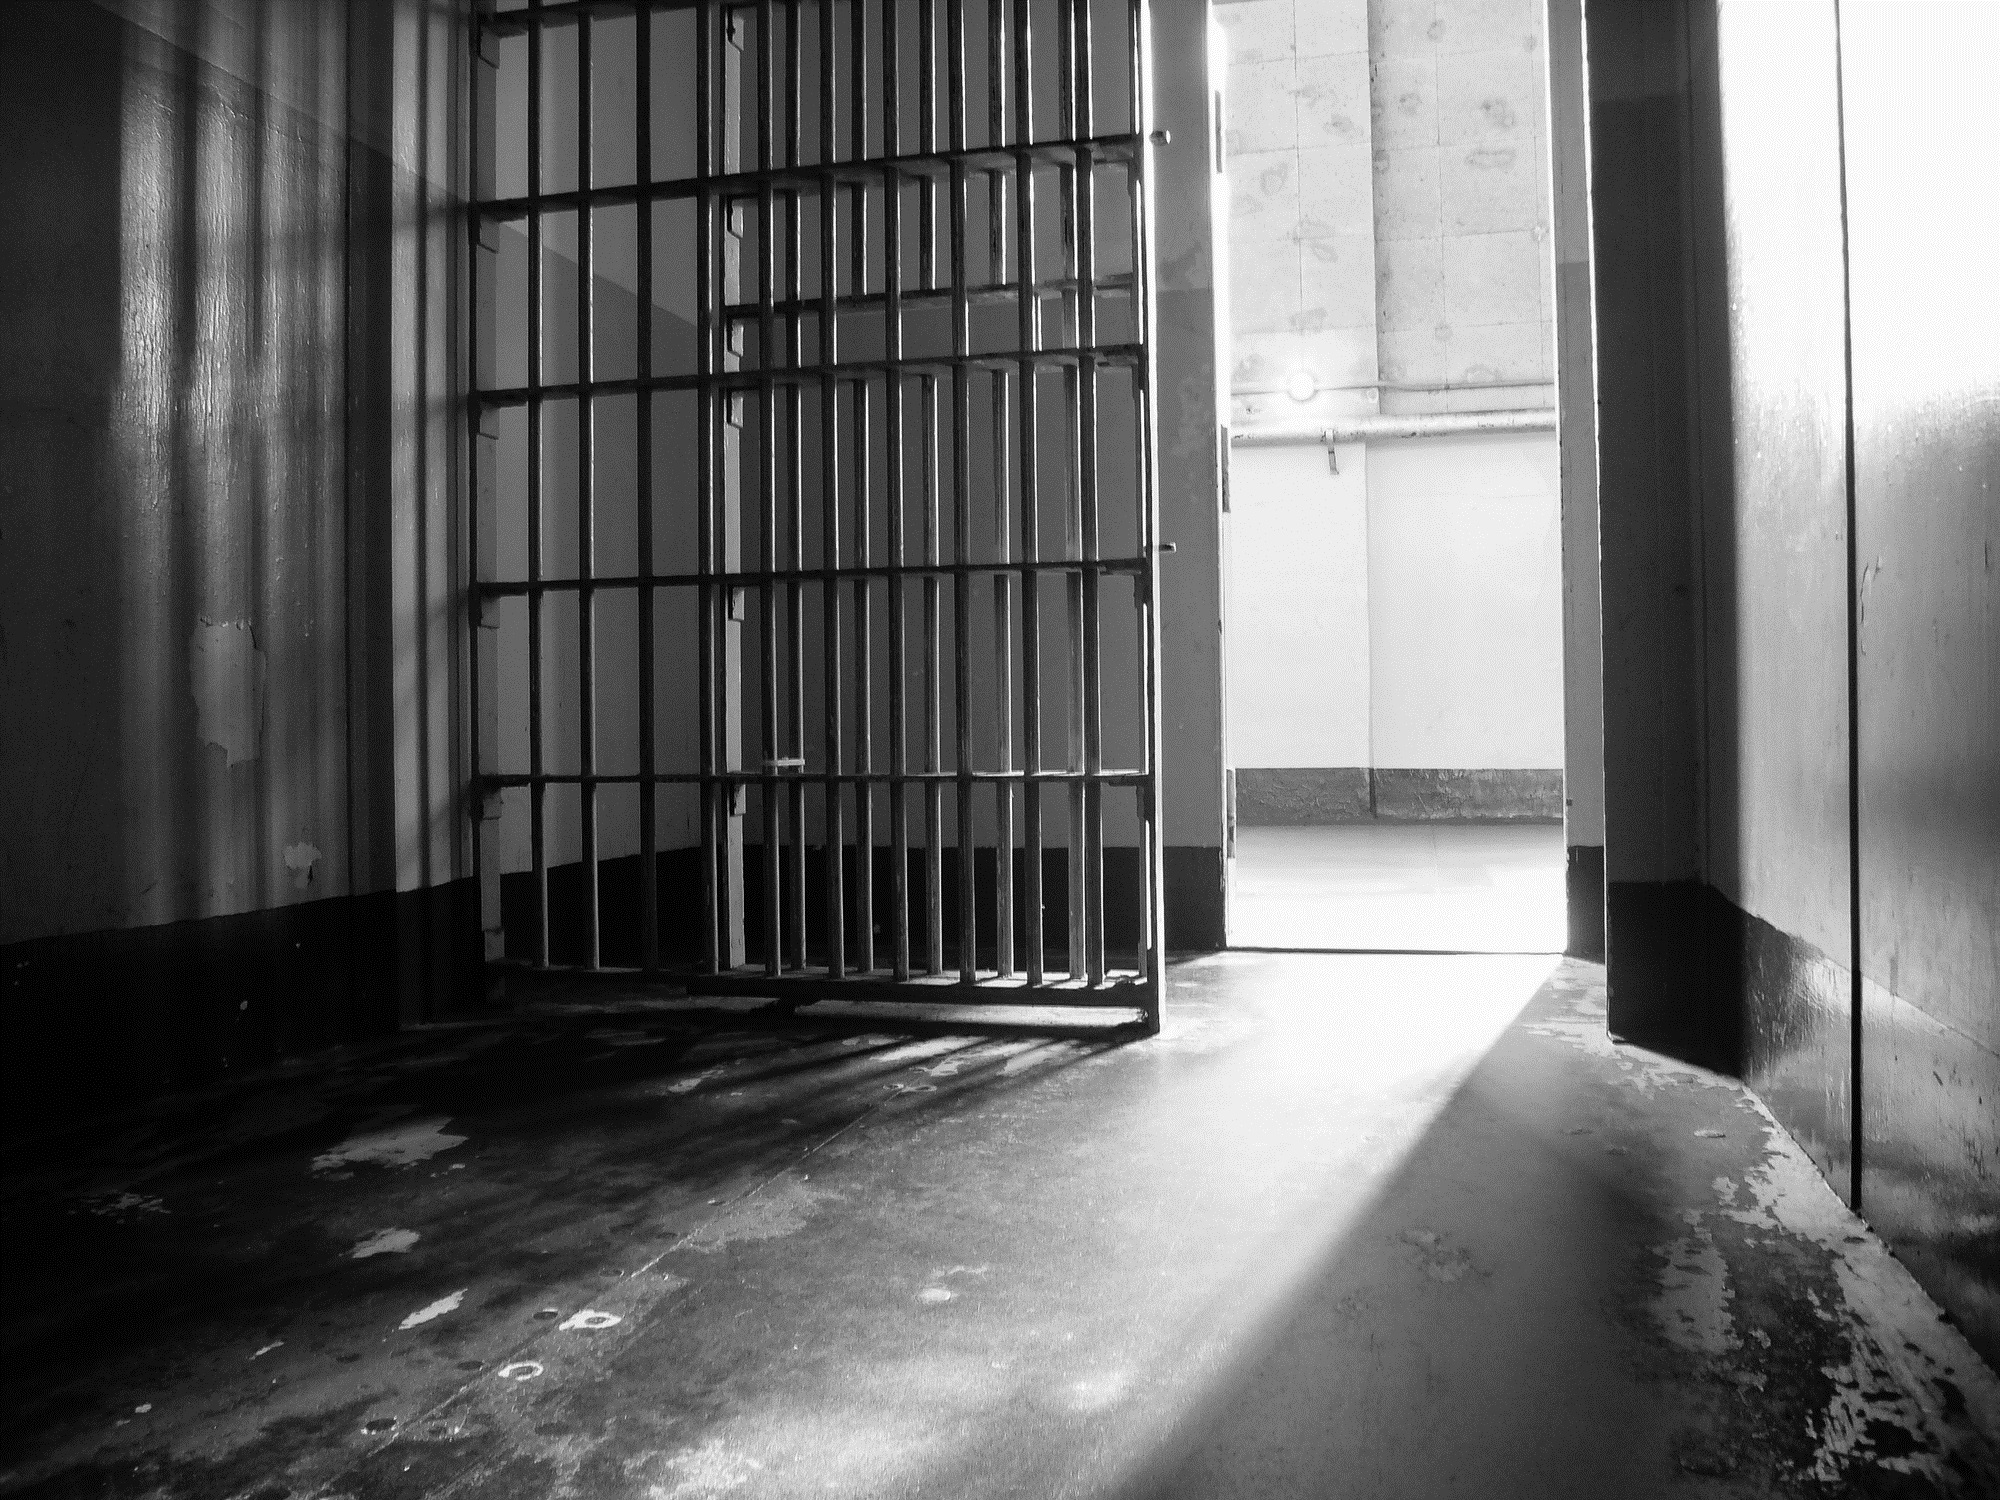 York County Prison in Pennsylvania Stops All Immigrant Detention